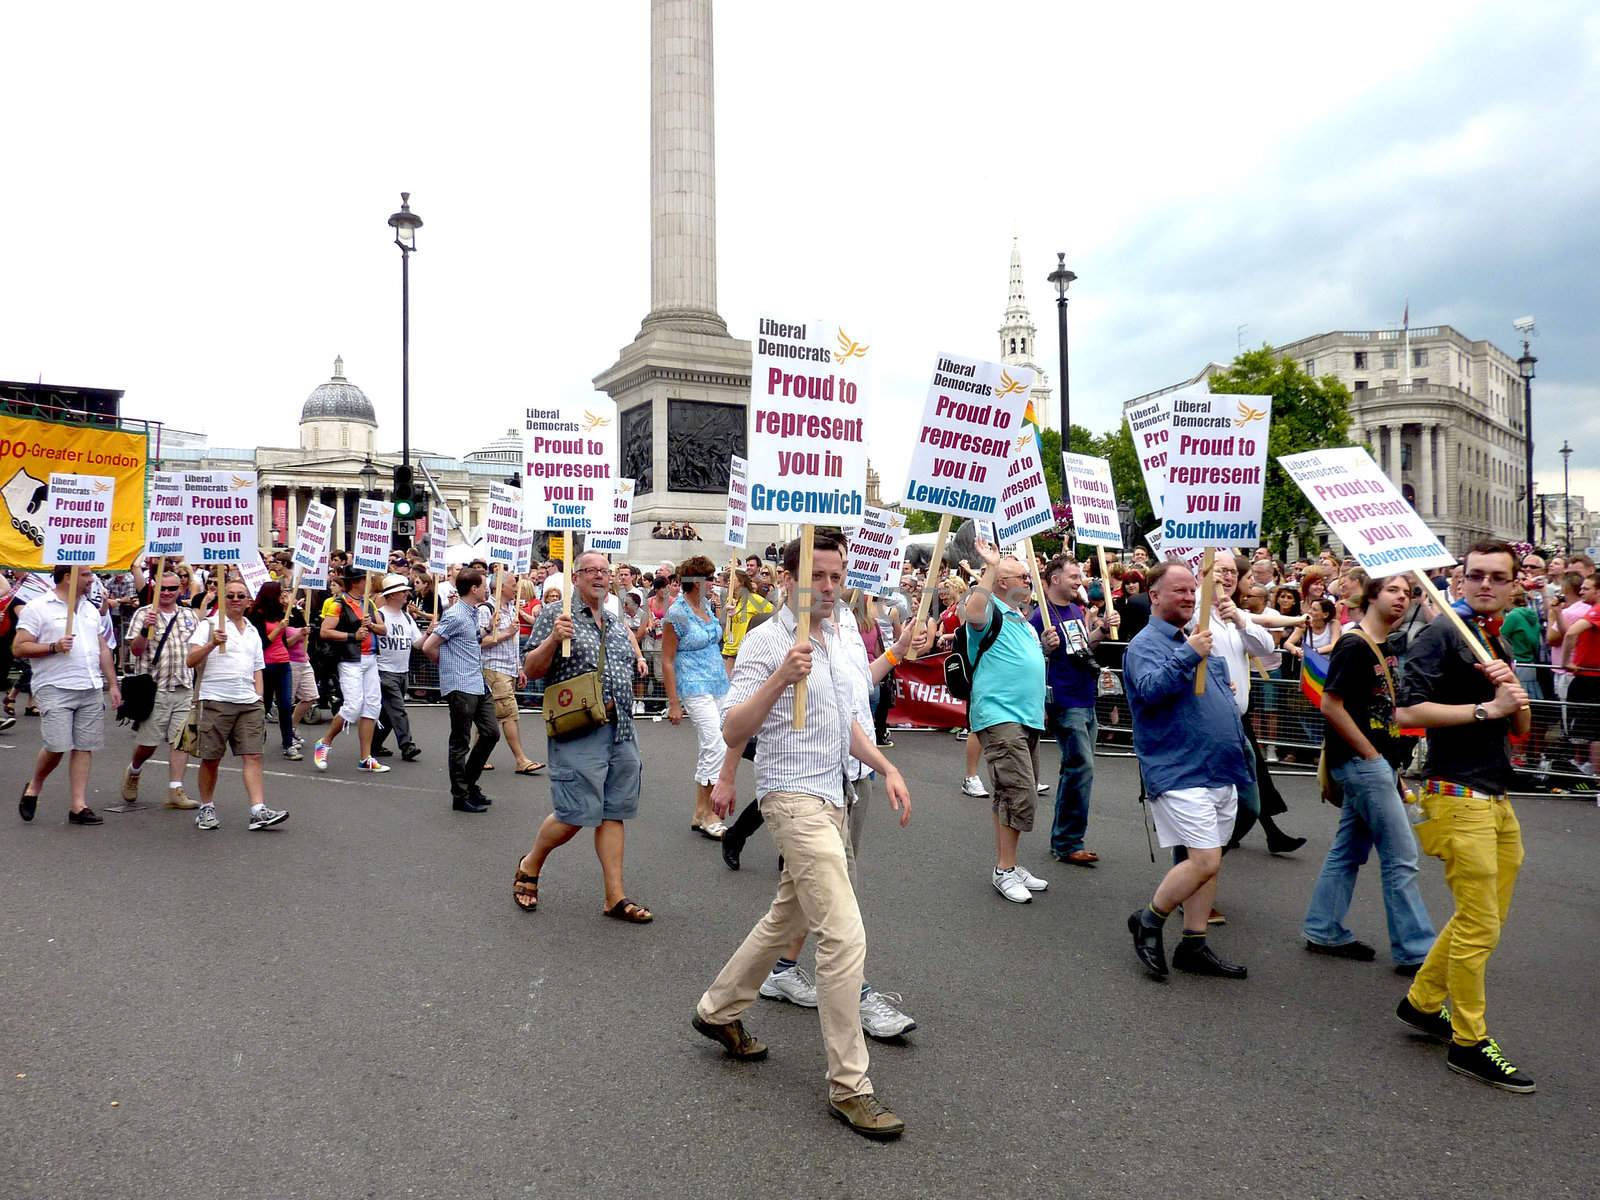 Gay Pride 2011 In Trafalgar Square London 2 July 2011  by harveysart